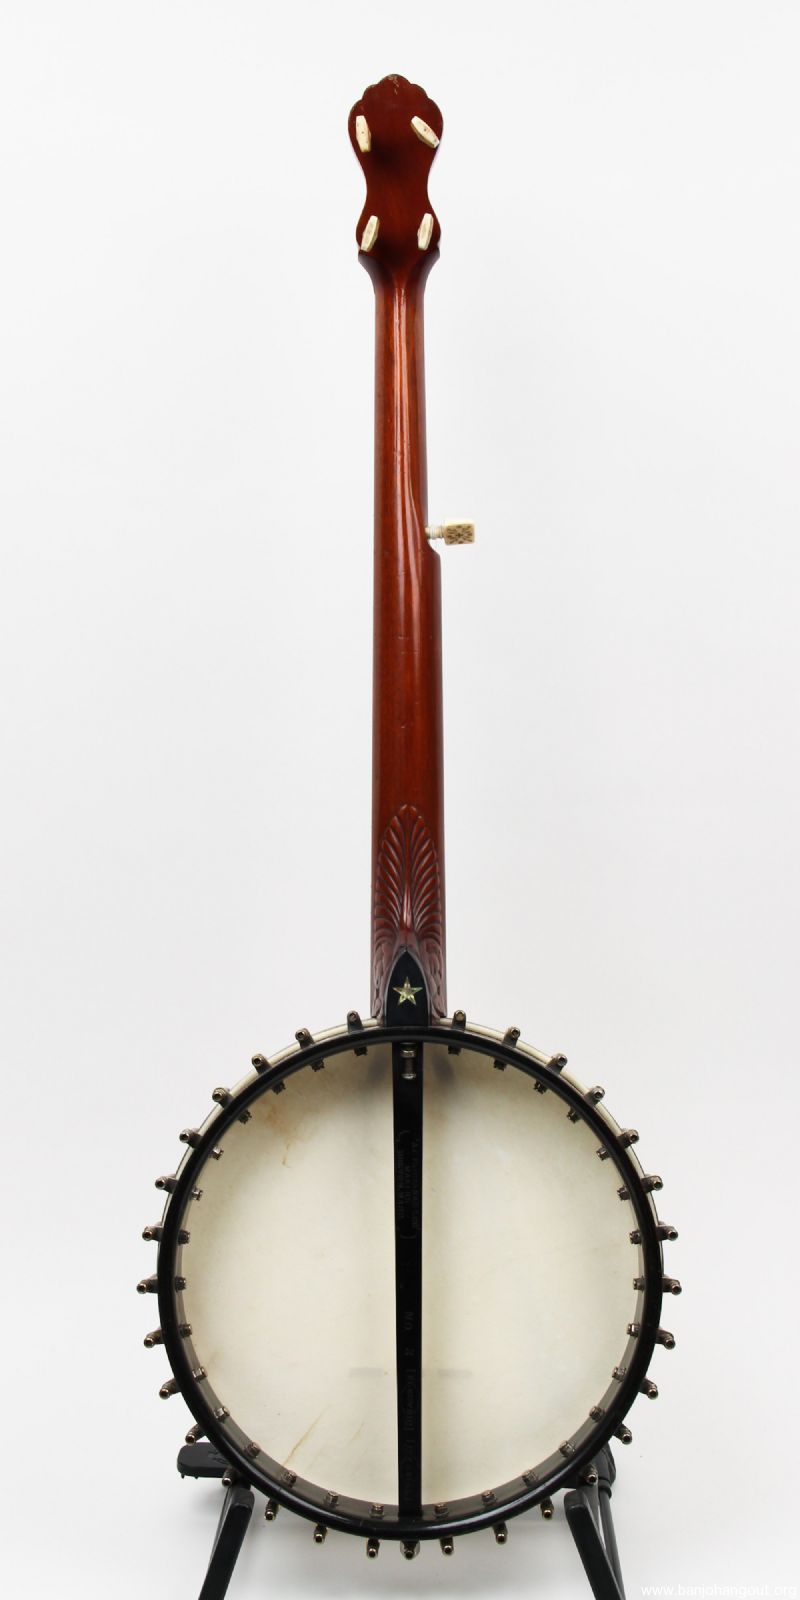 fairbanks special electric banjo for sale